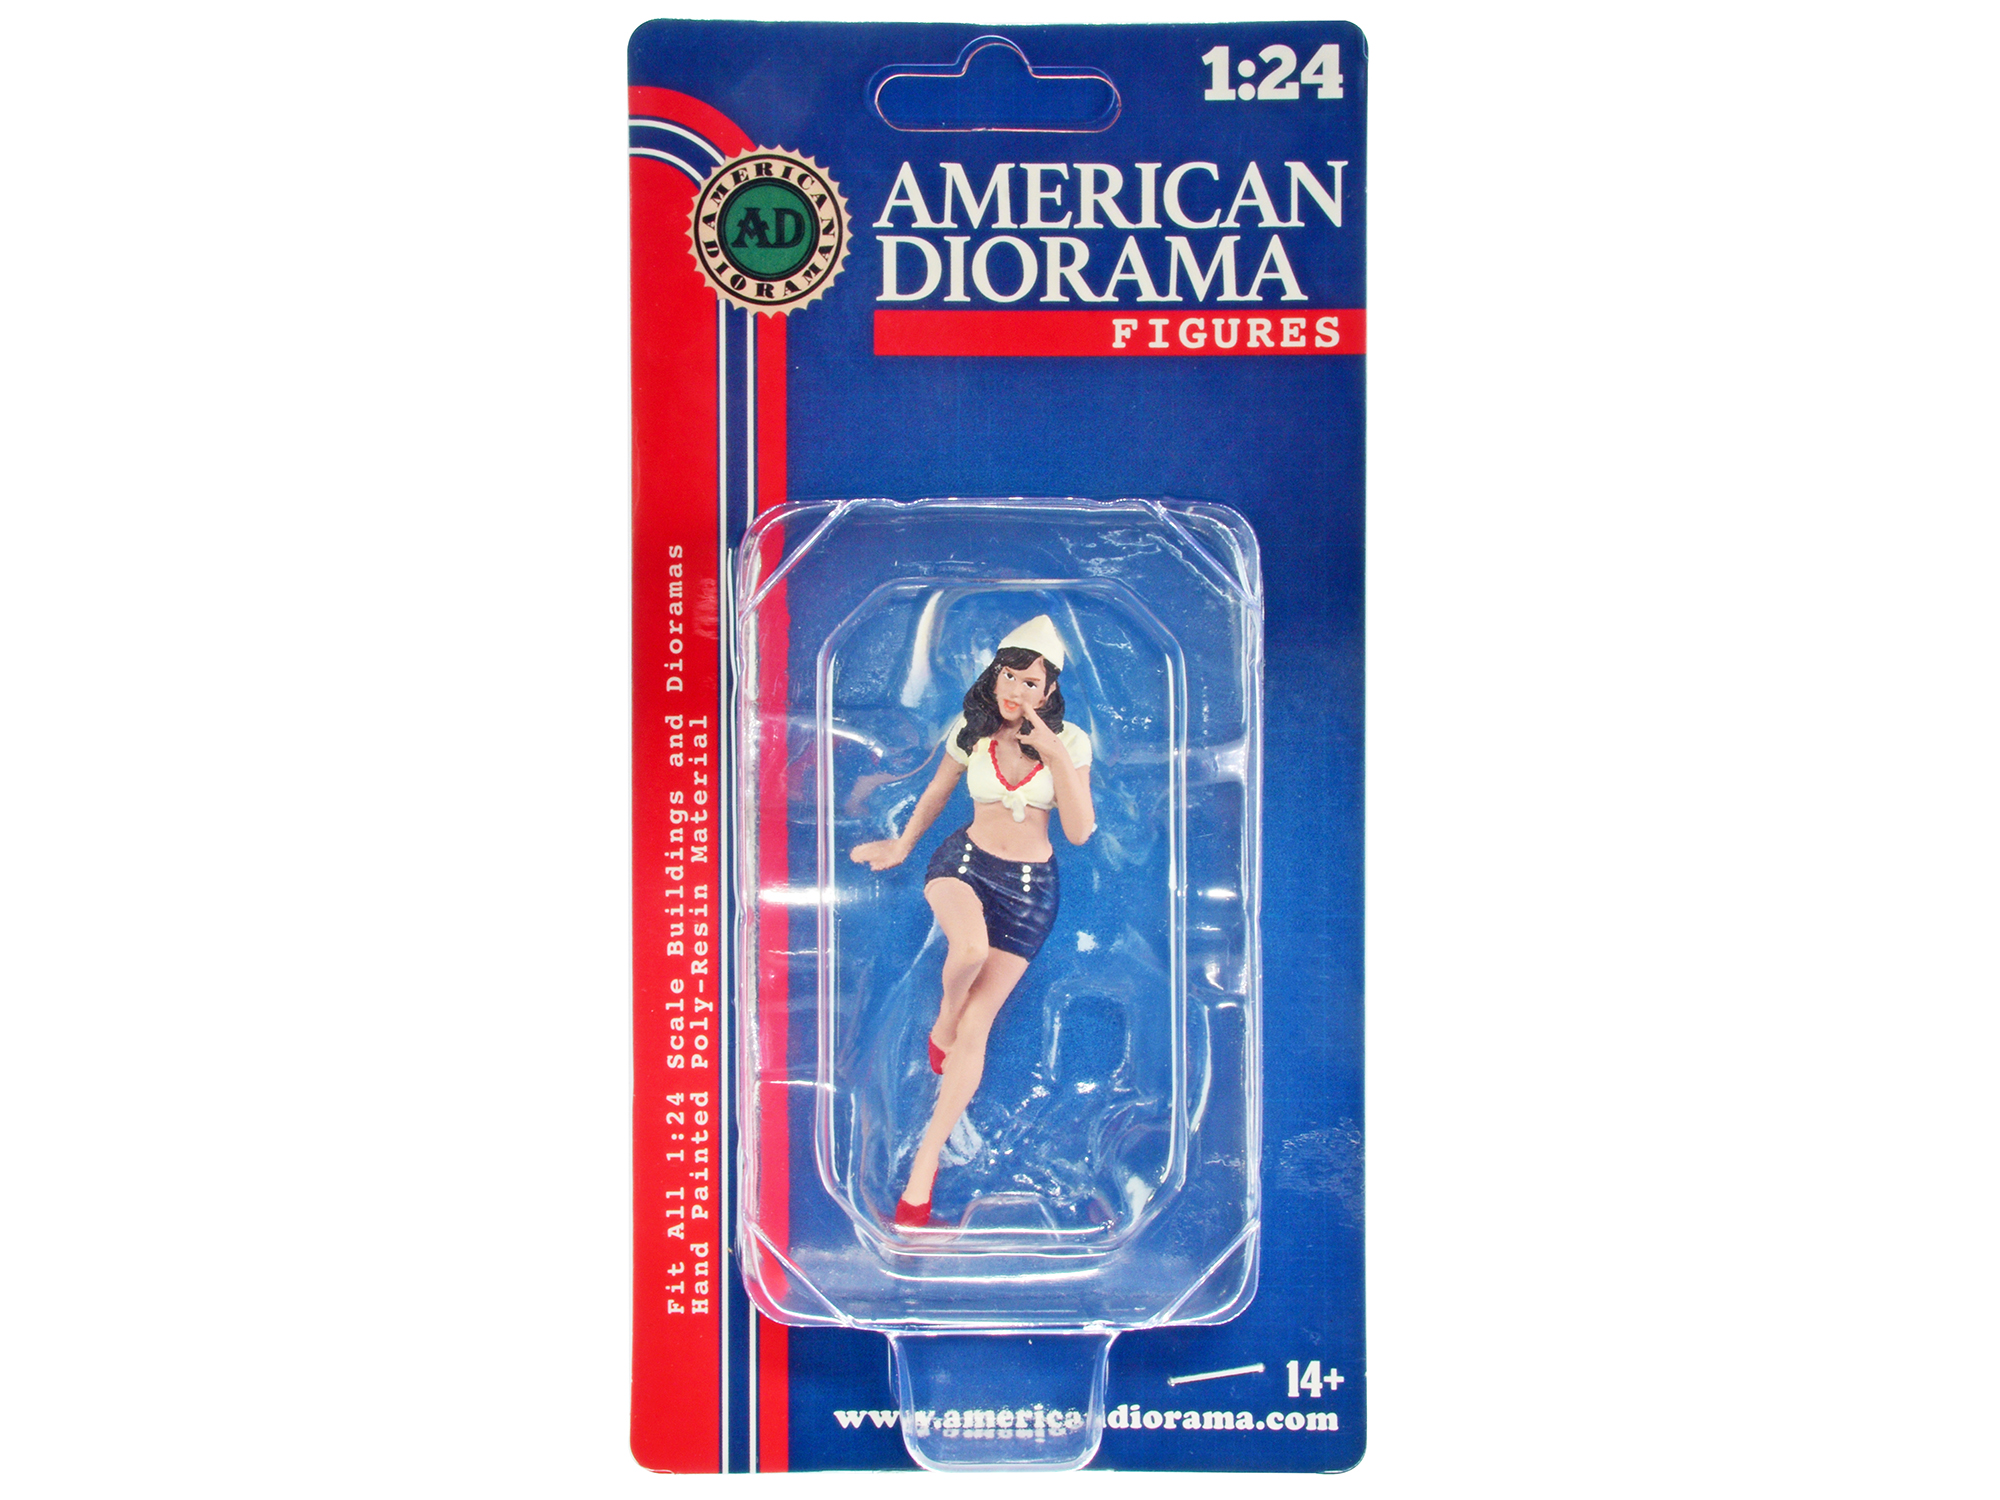 American Diorama "Pin-Up Girls" Sandra Figure for 1/24 Scale Models by American Diorama